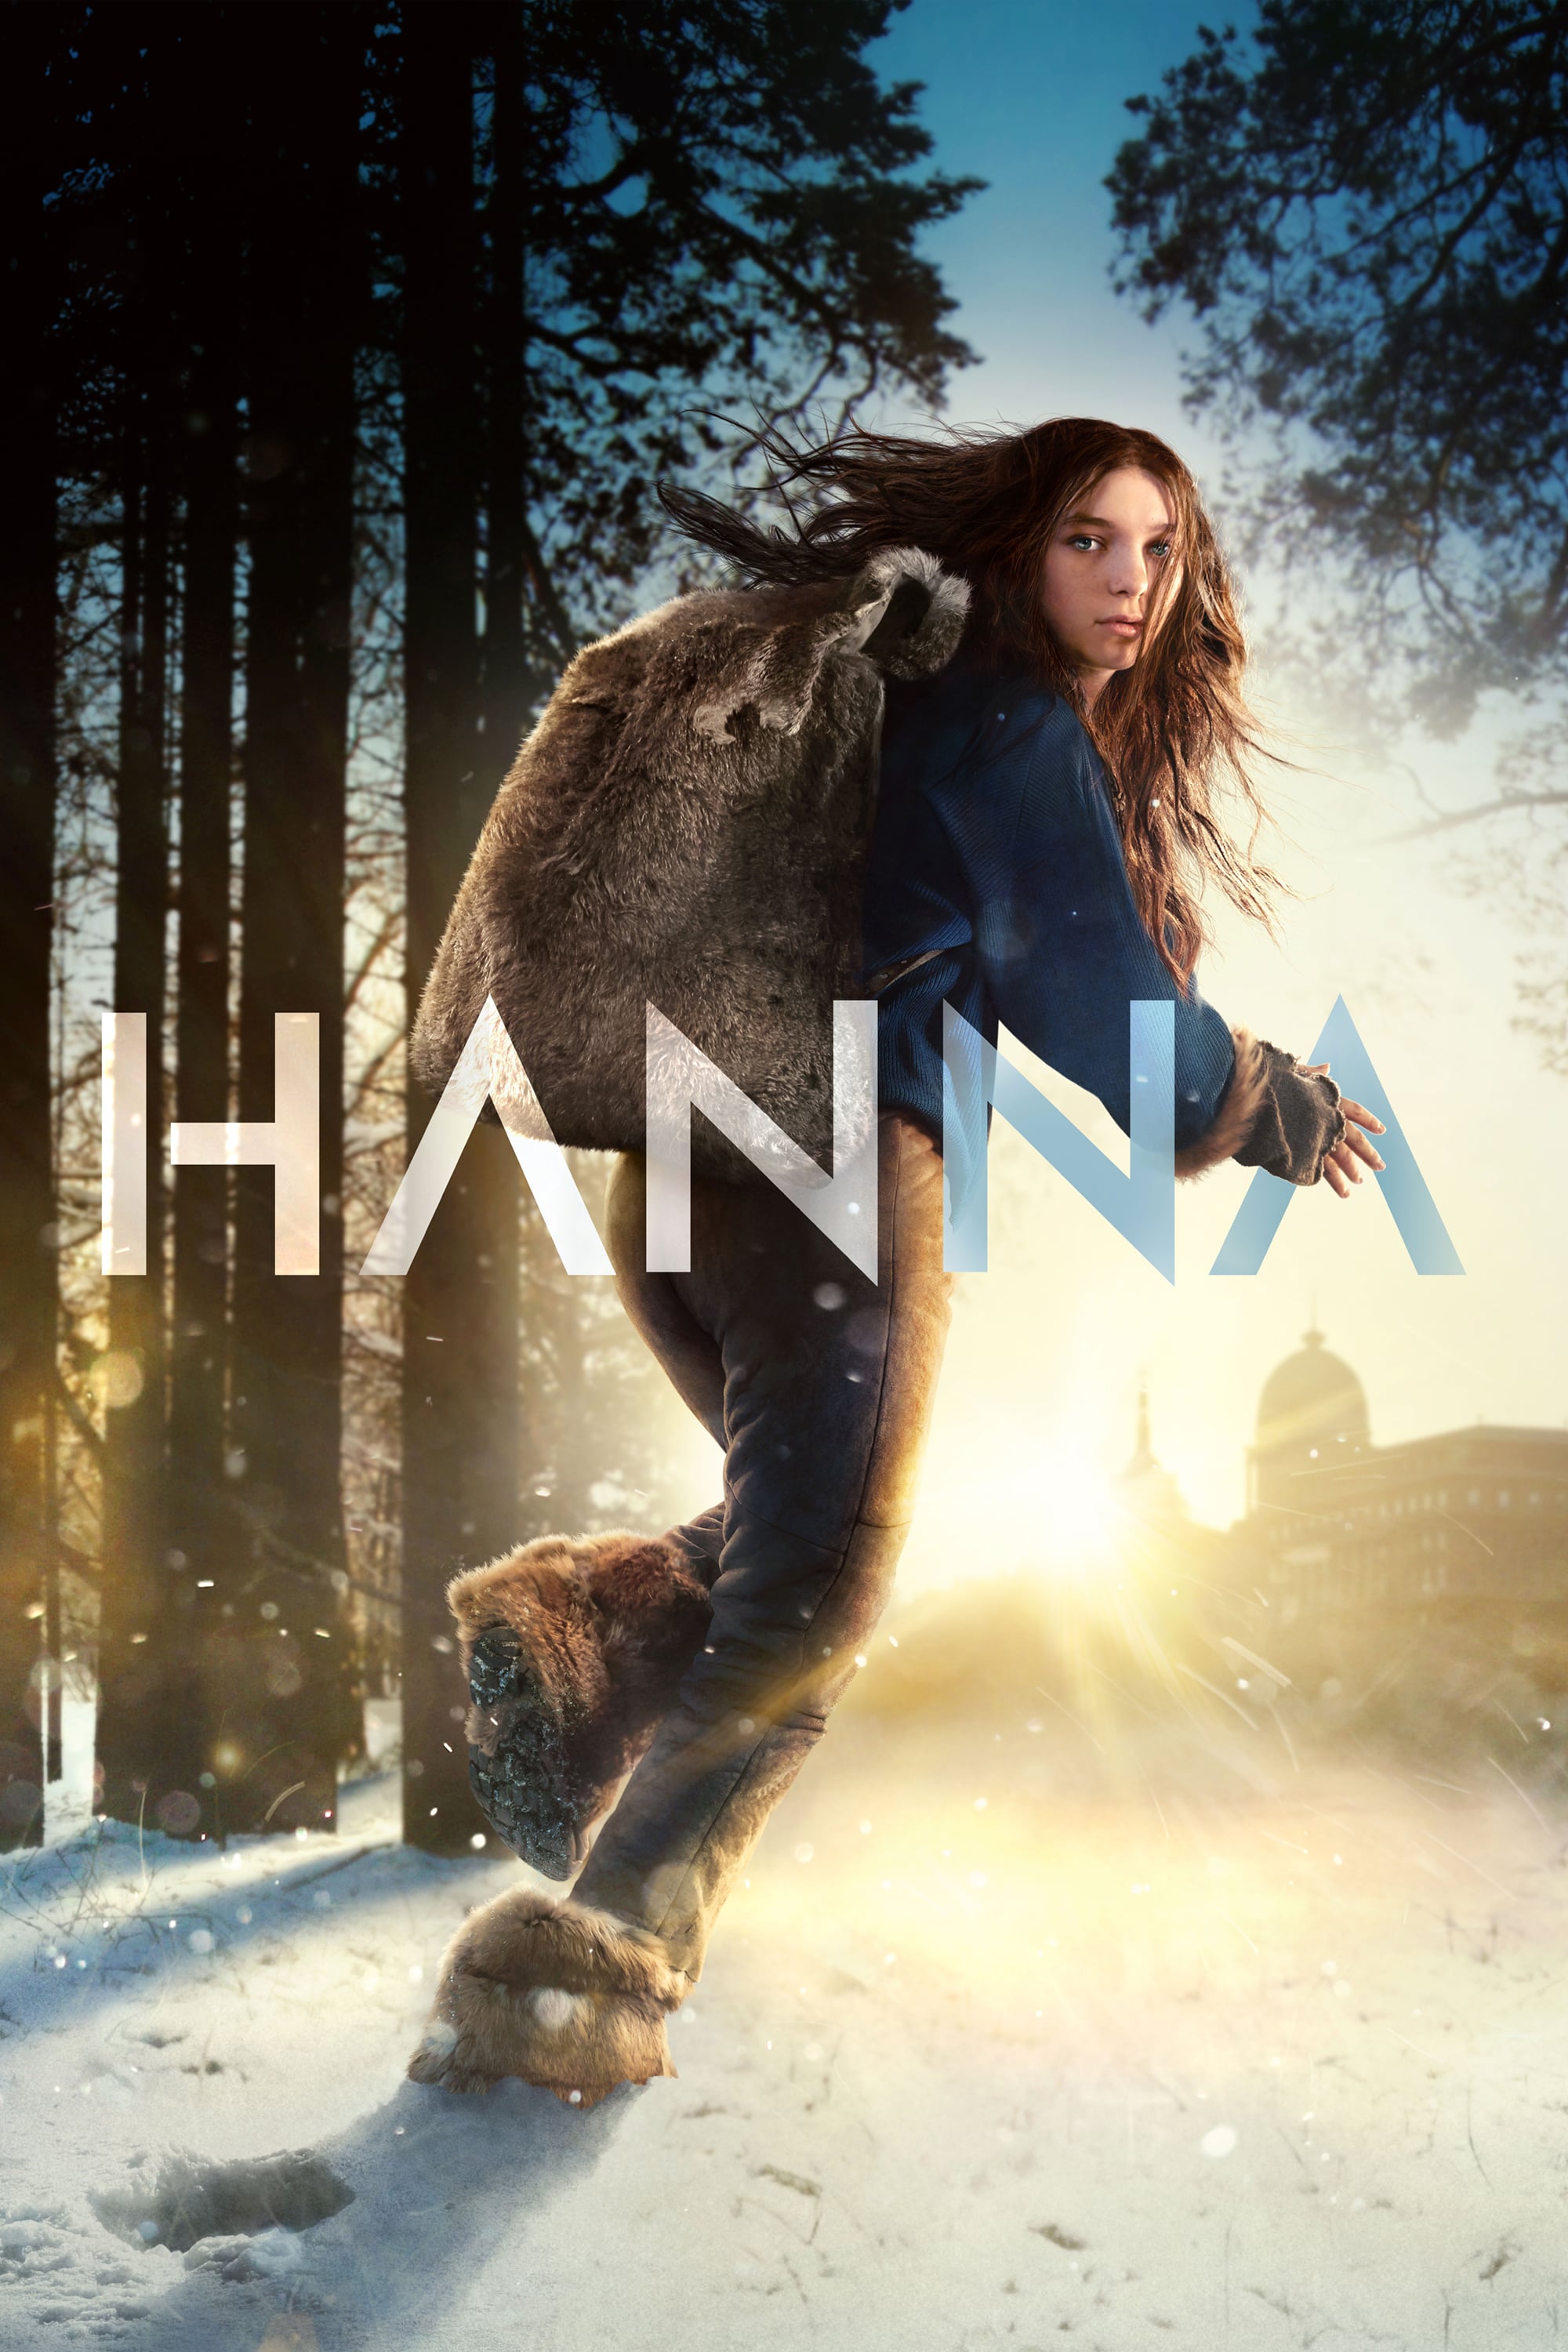 Hanna rating